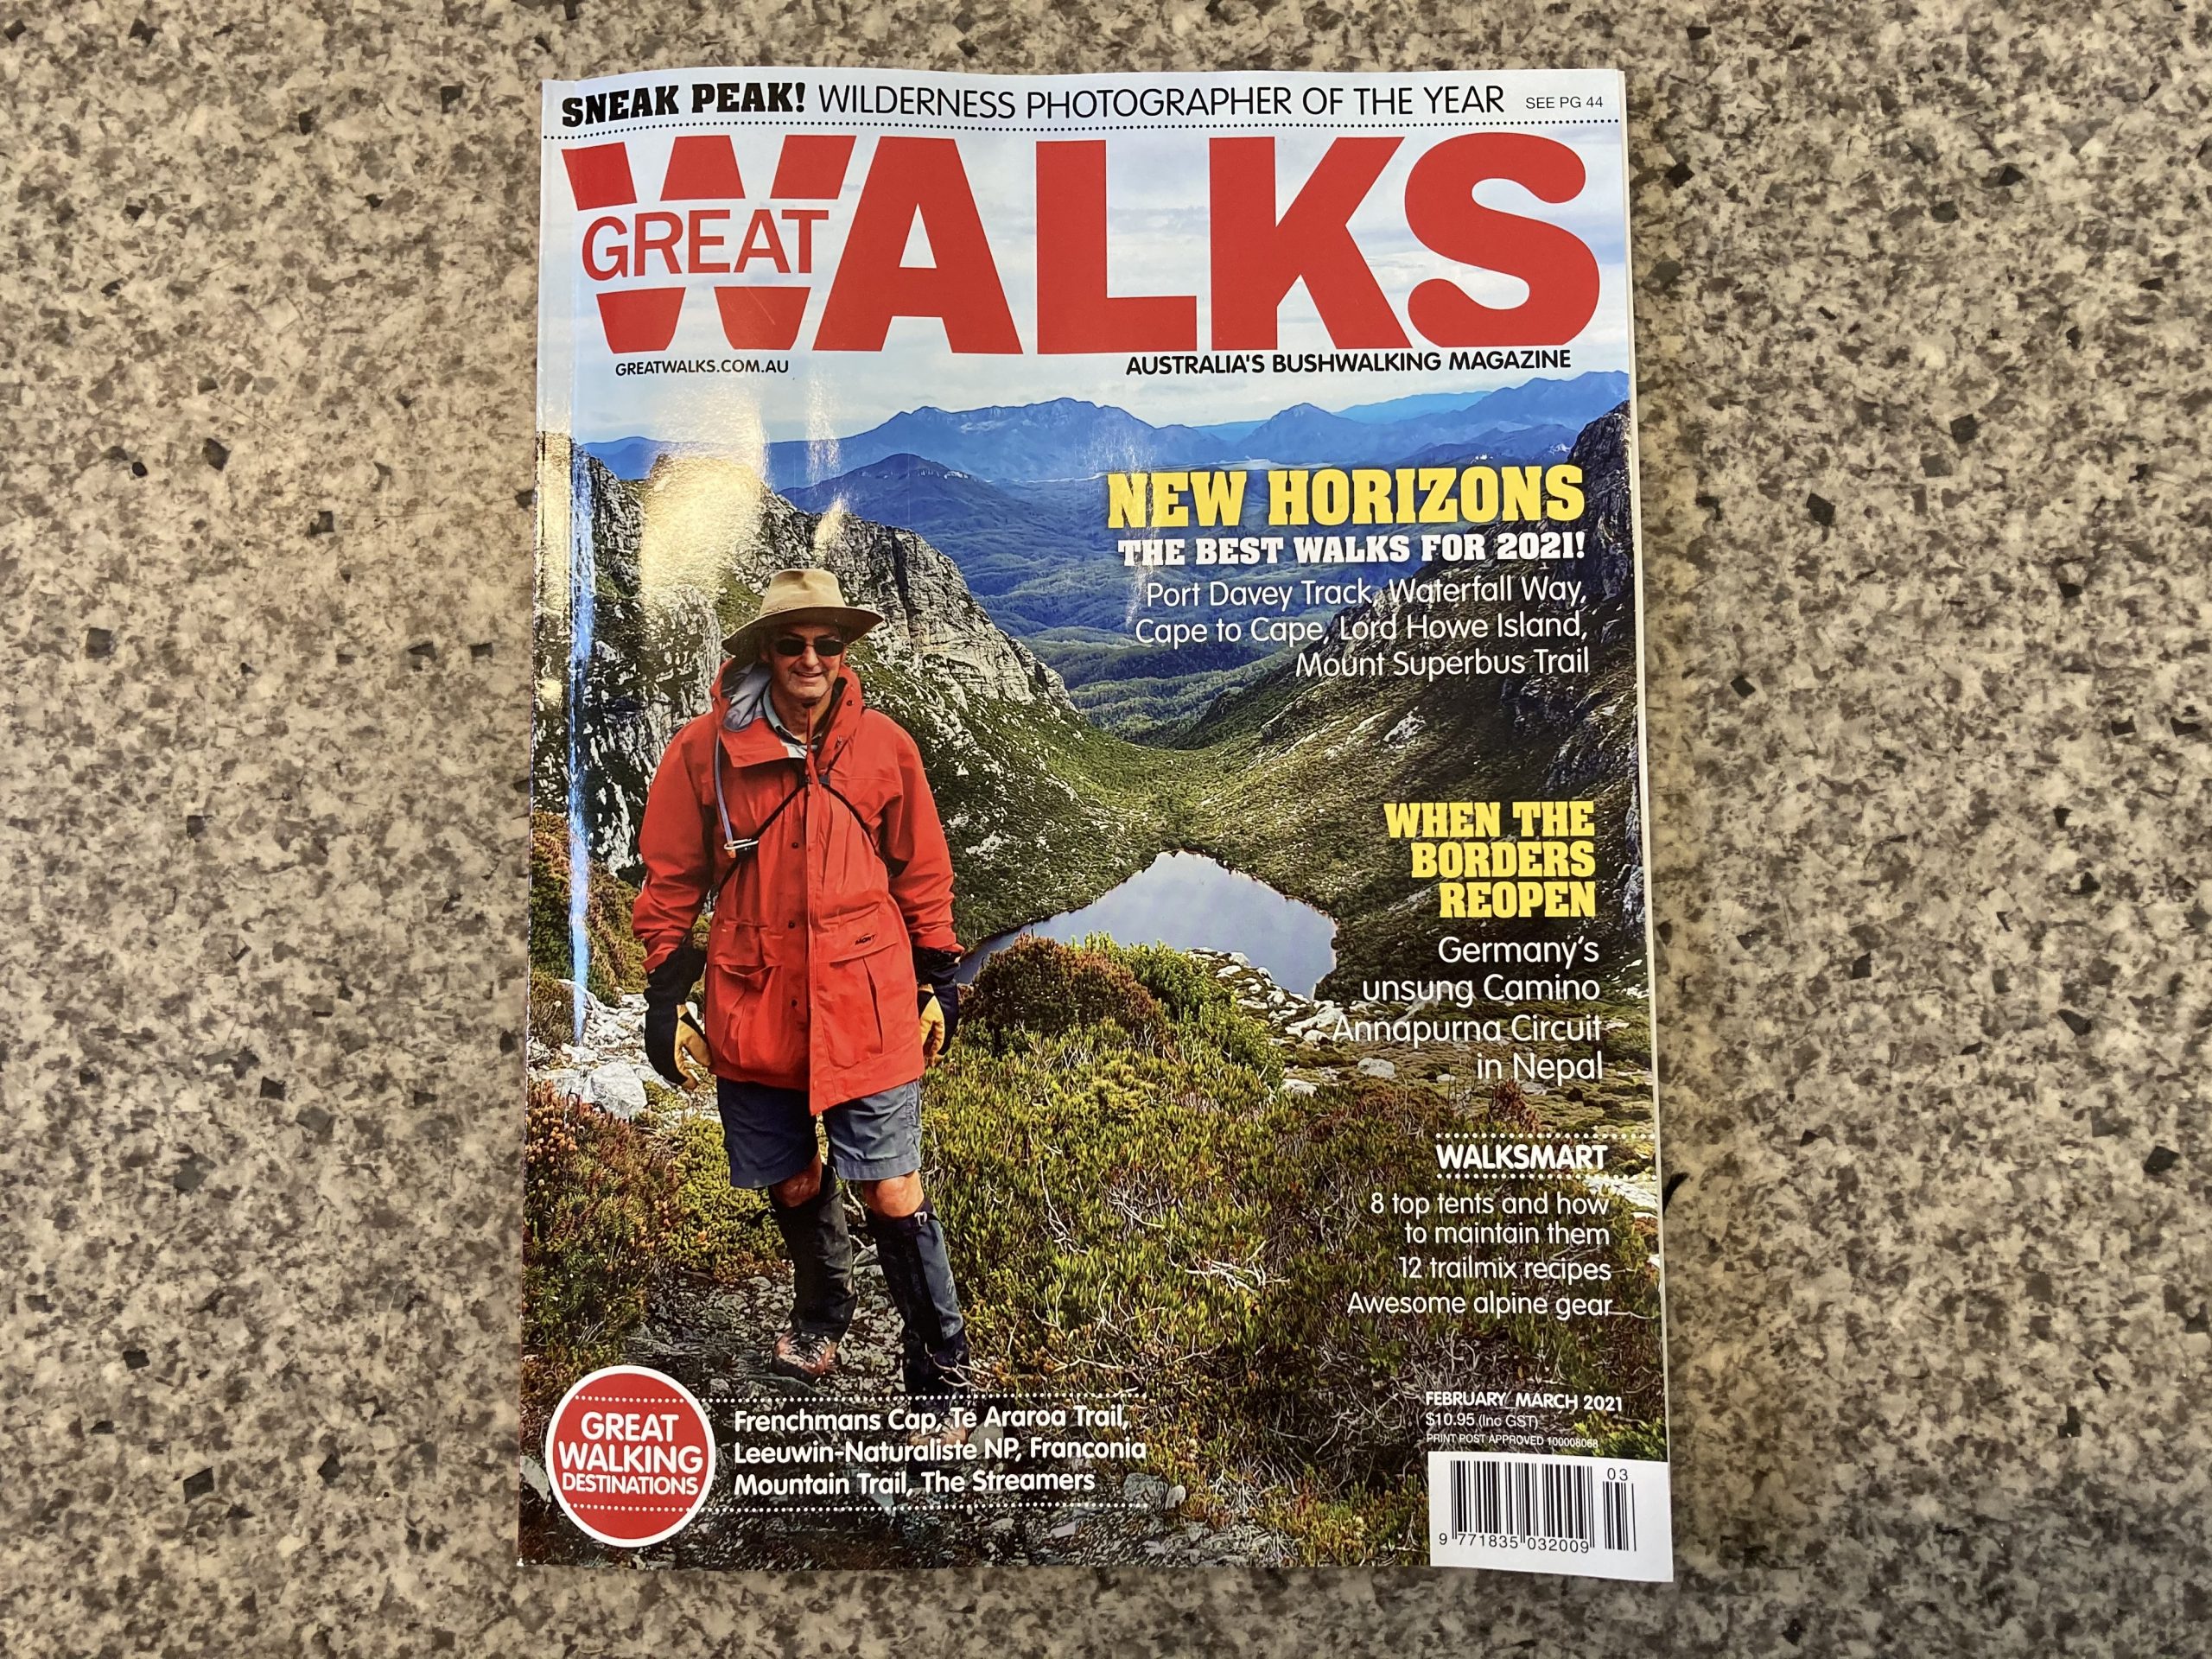 Great Walks Magazine story (part 2)